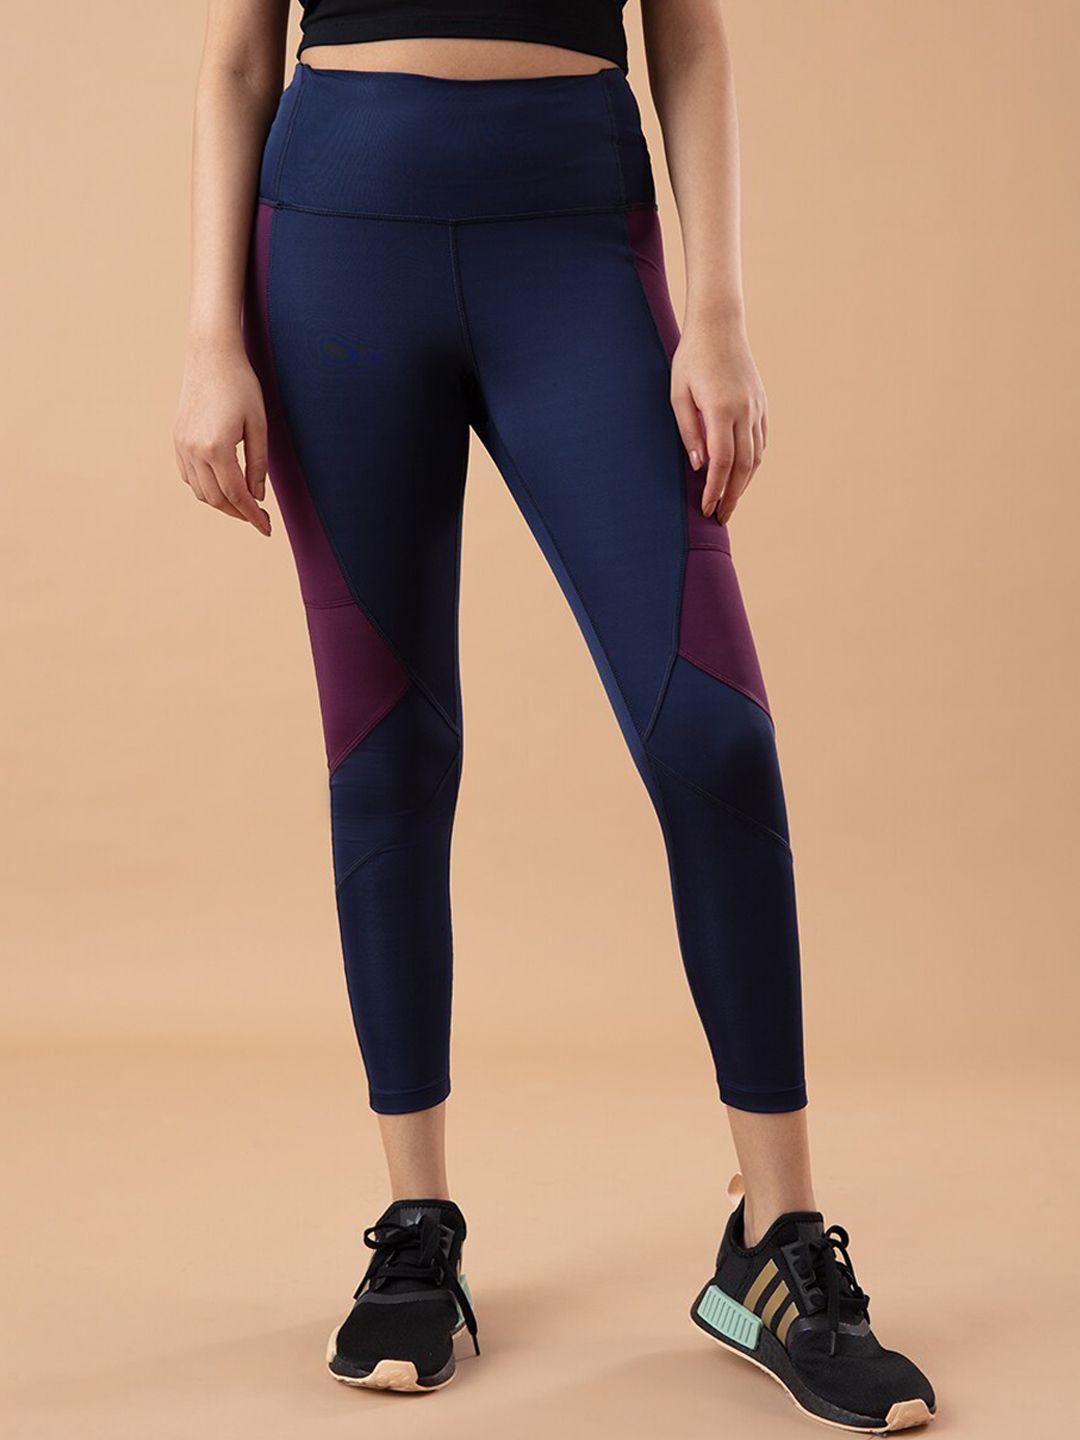 nykd-women-navy-blue-&-purple-colourblocked-gym-tights